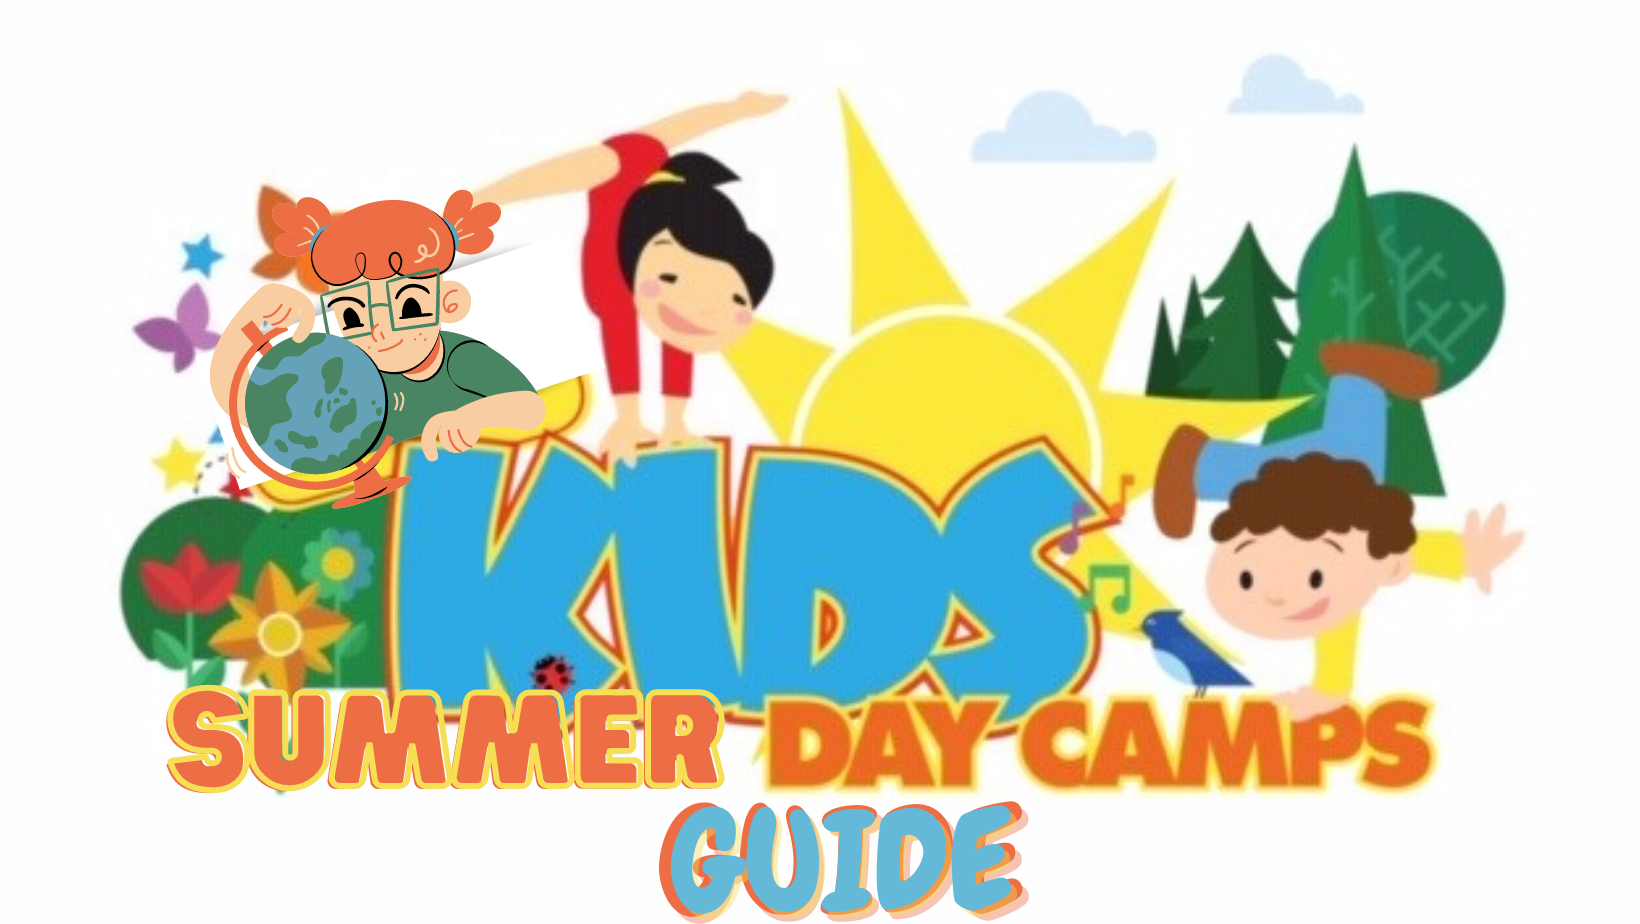 Summer Day Camp Guide - Truro Buzz